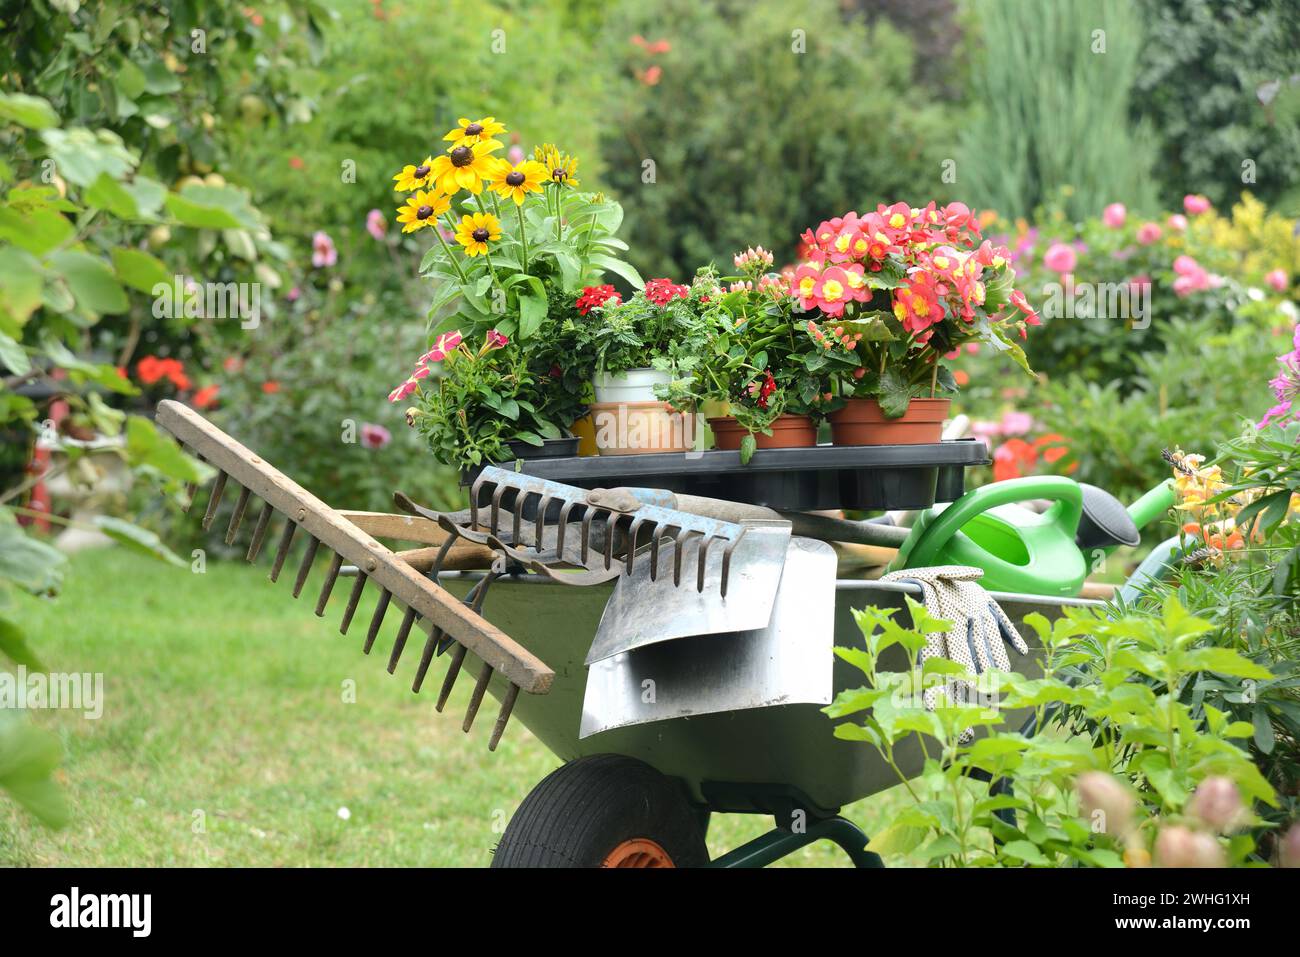 Wheelbarrow with garden tools Stock Photo